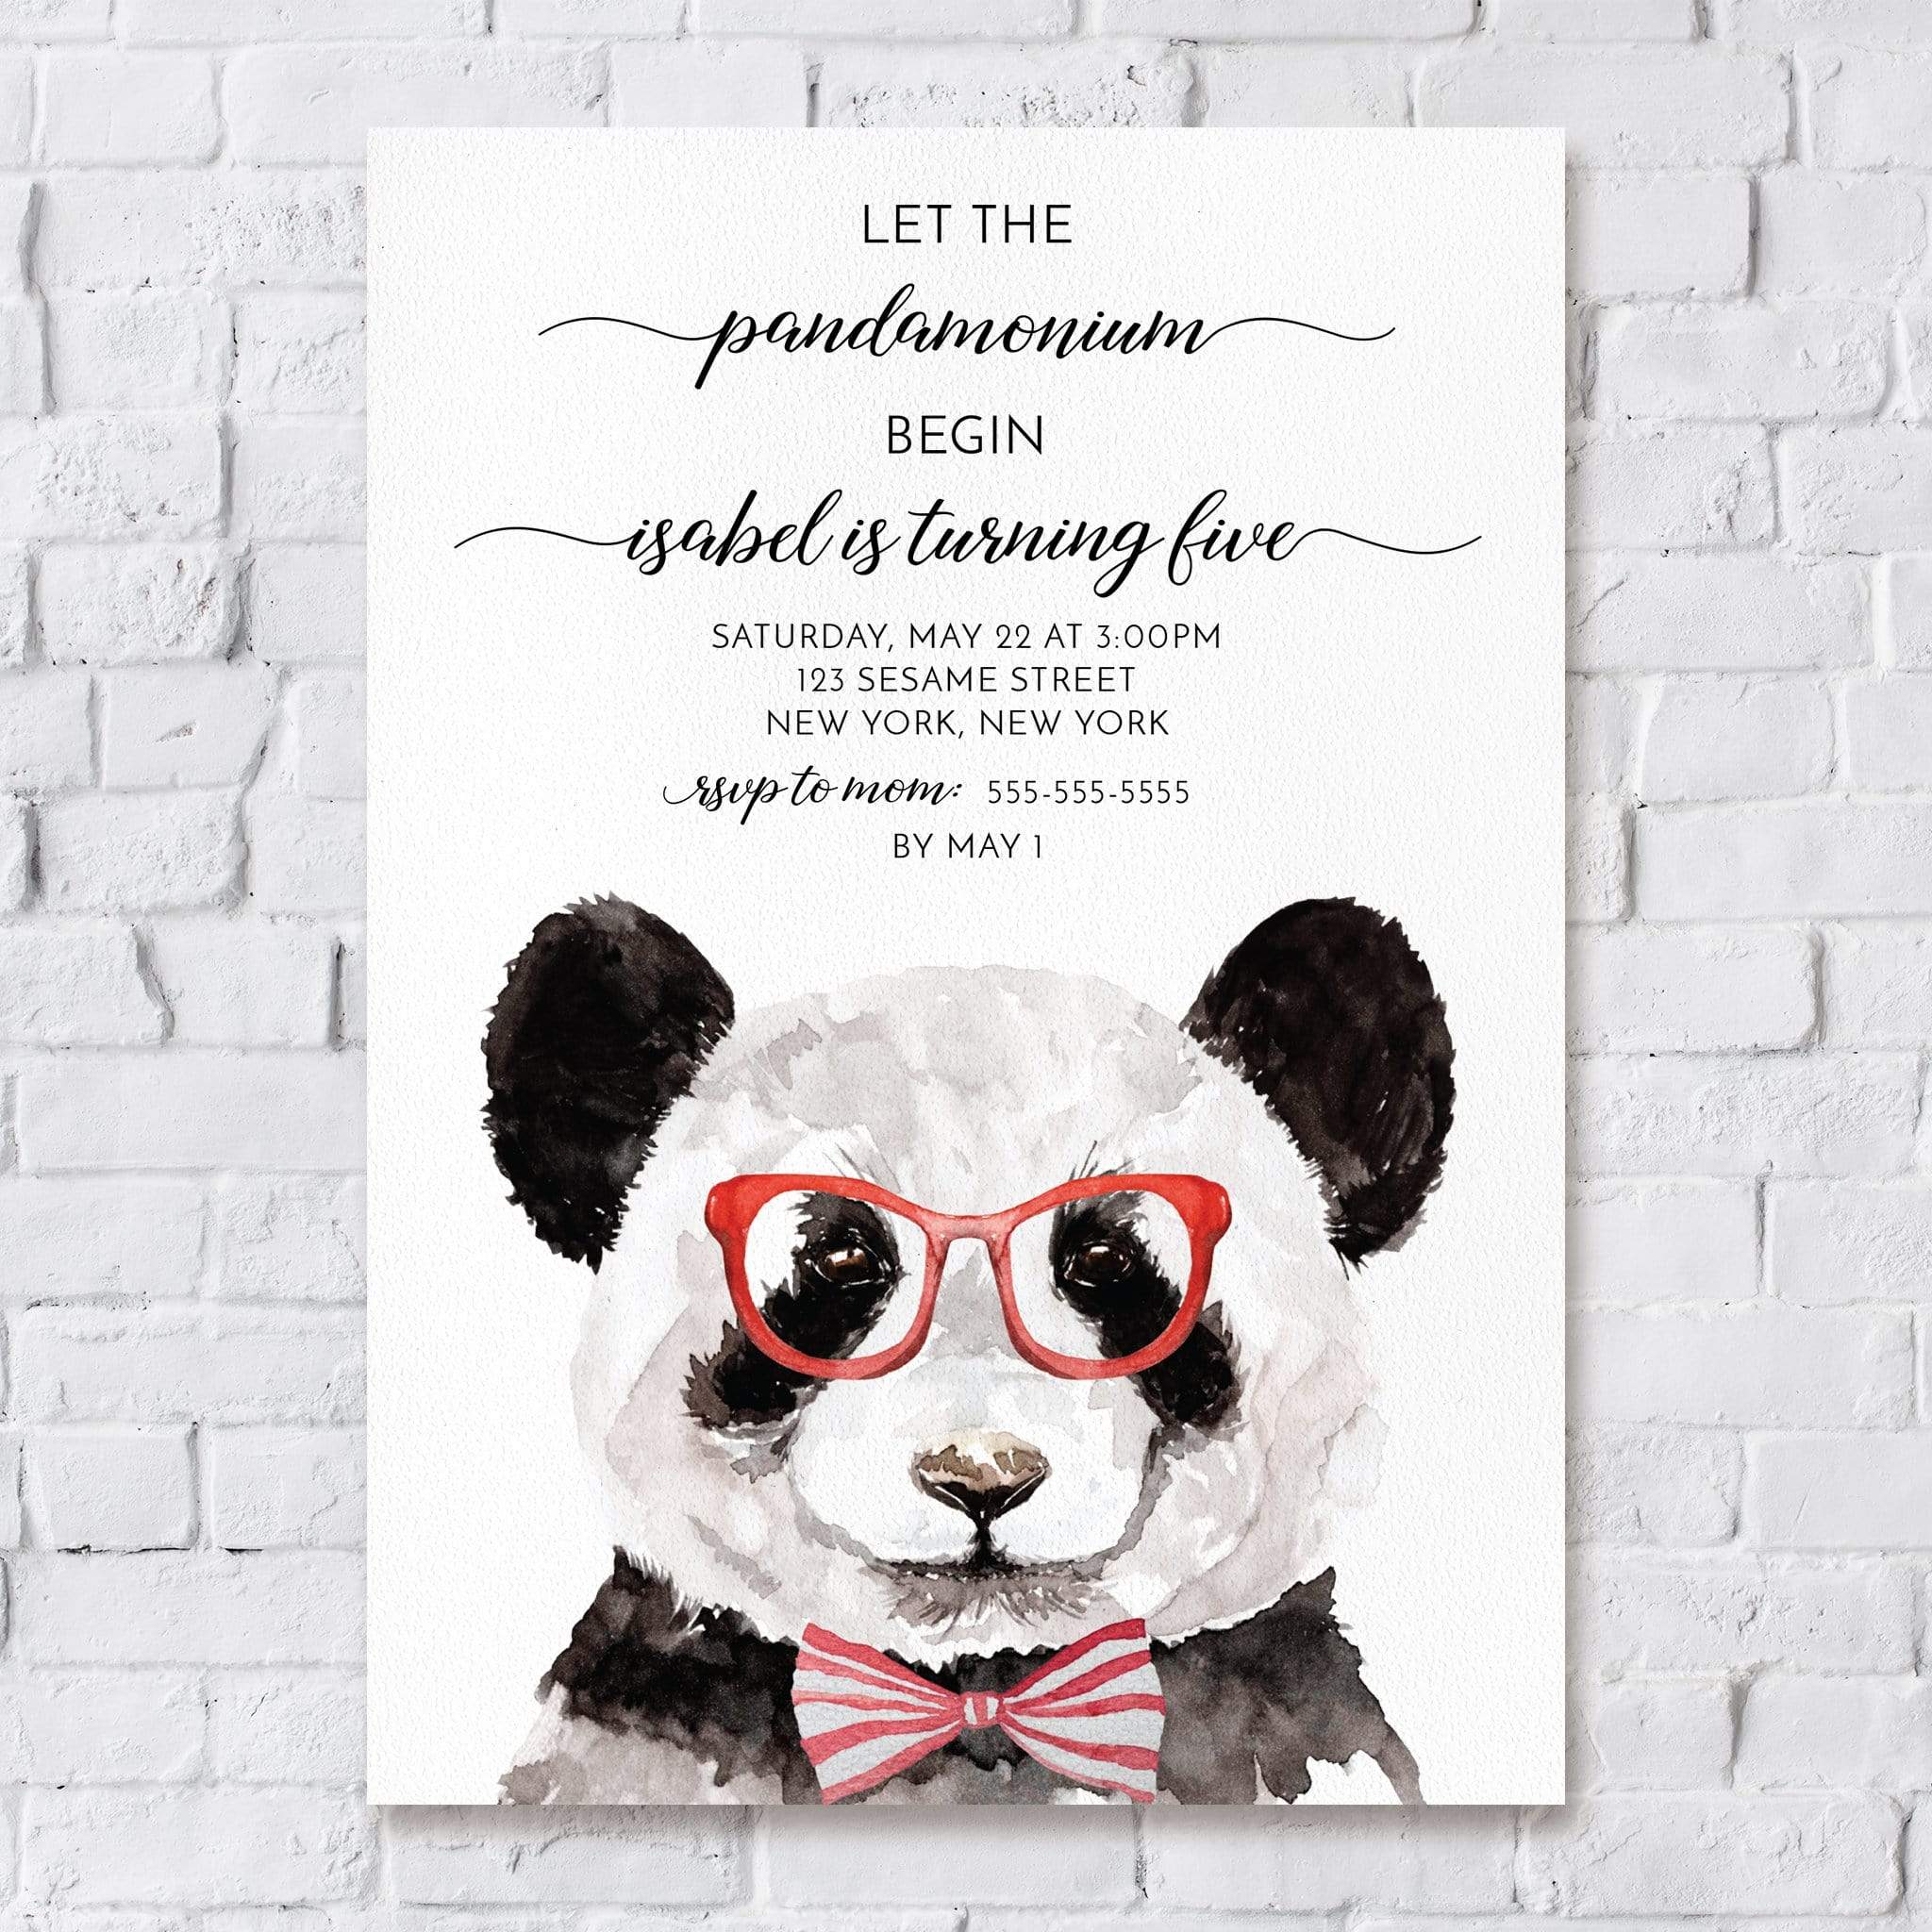 Loblolly Creative Digital Template Kids Pandamonium Birthday Invitation